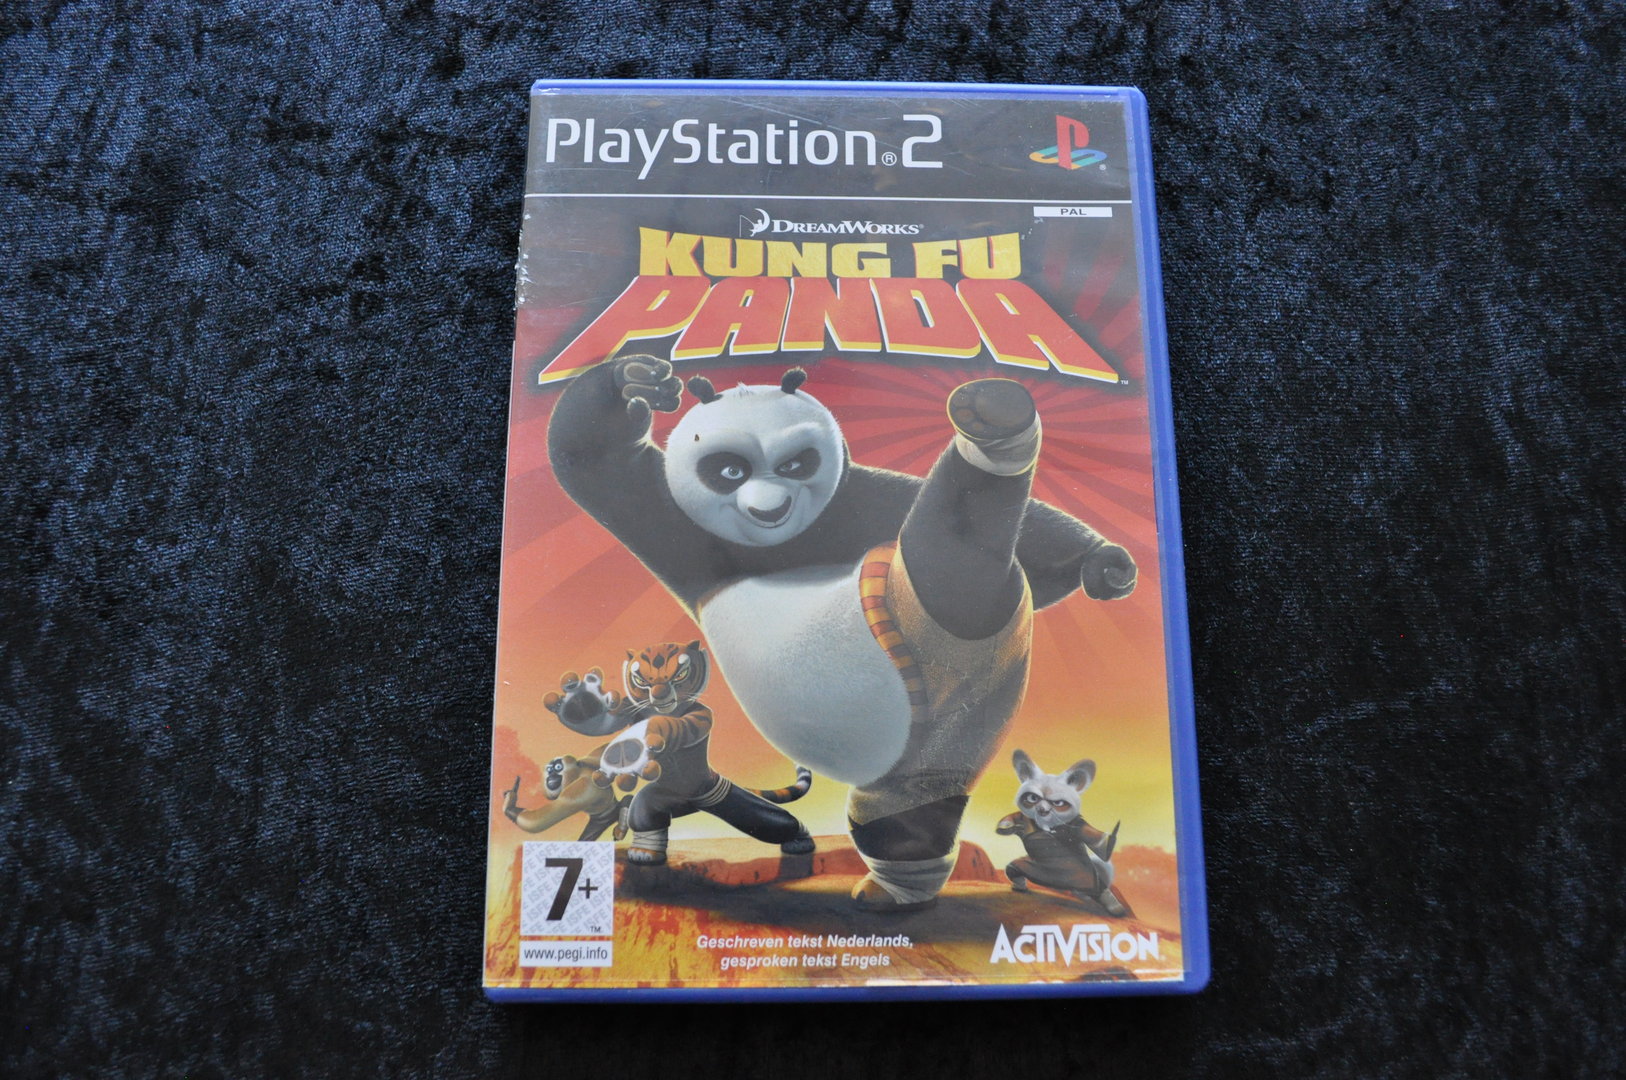 Reaktor Behov for kerne Kung Fu Panda Playstation 2 PS2 - Retrogameking.com |  Retro,Games,Consoles,Collectables